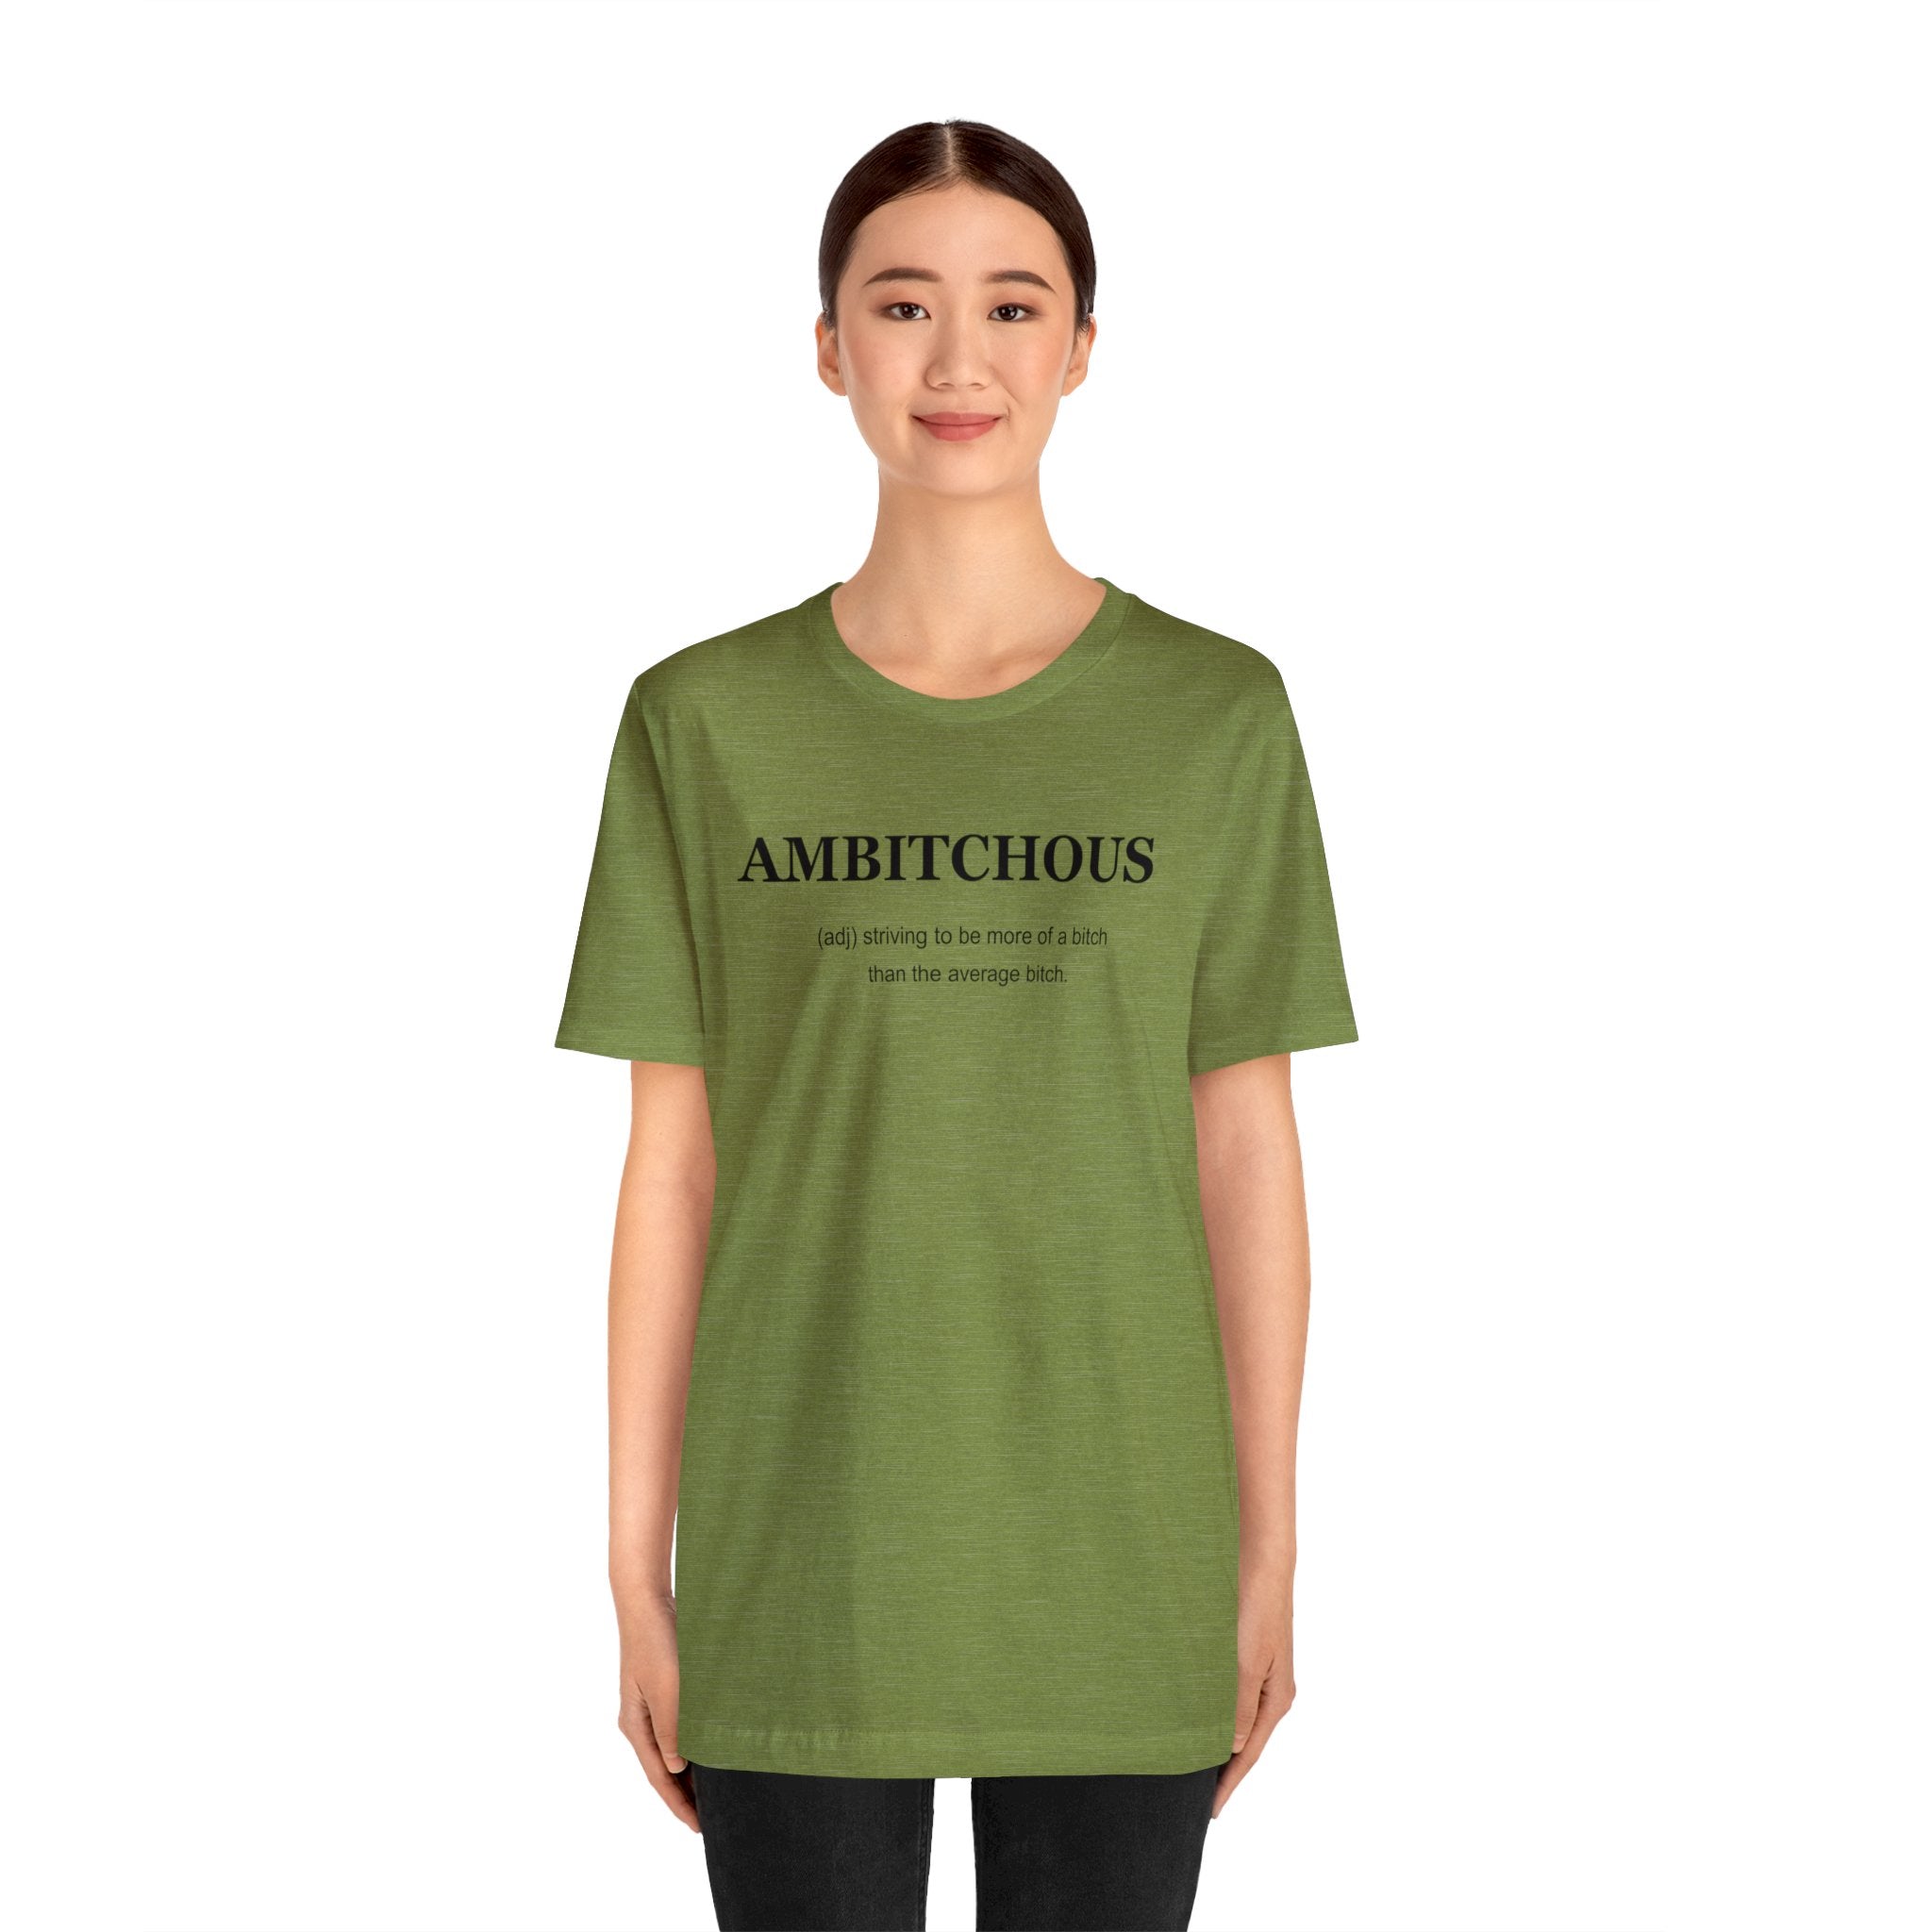 A woman wearing an empowering green Ambitchious T Shirt.